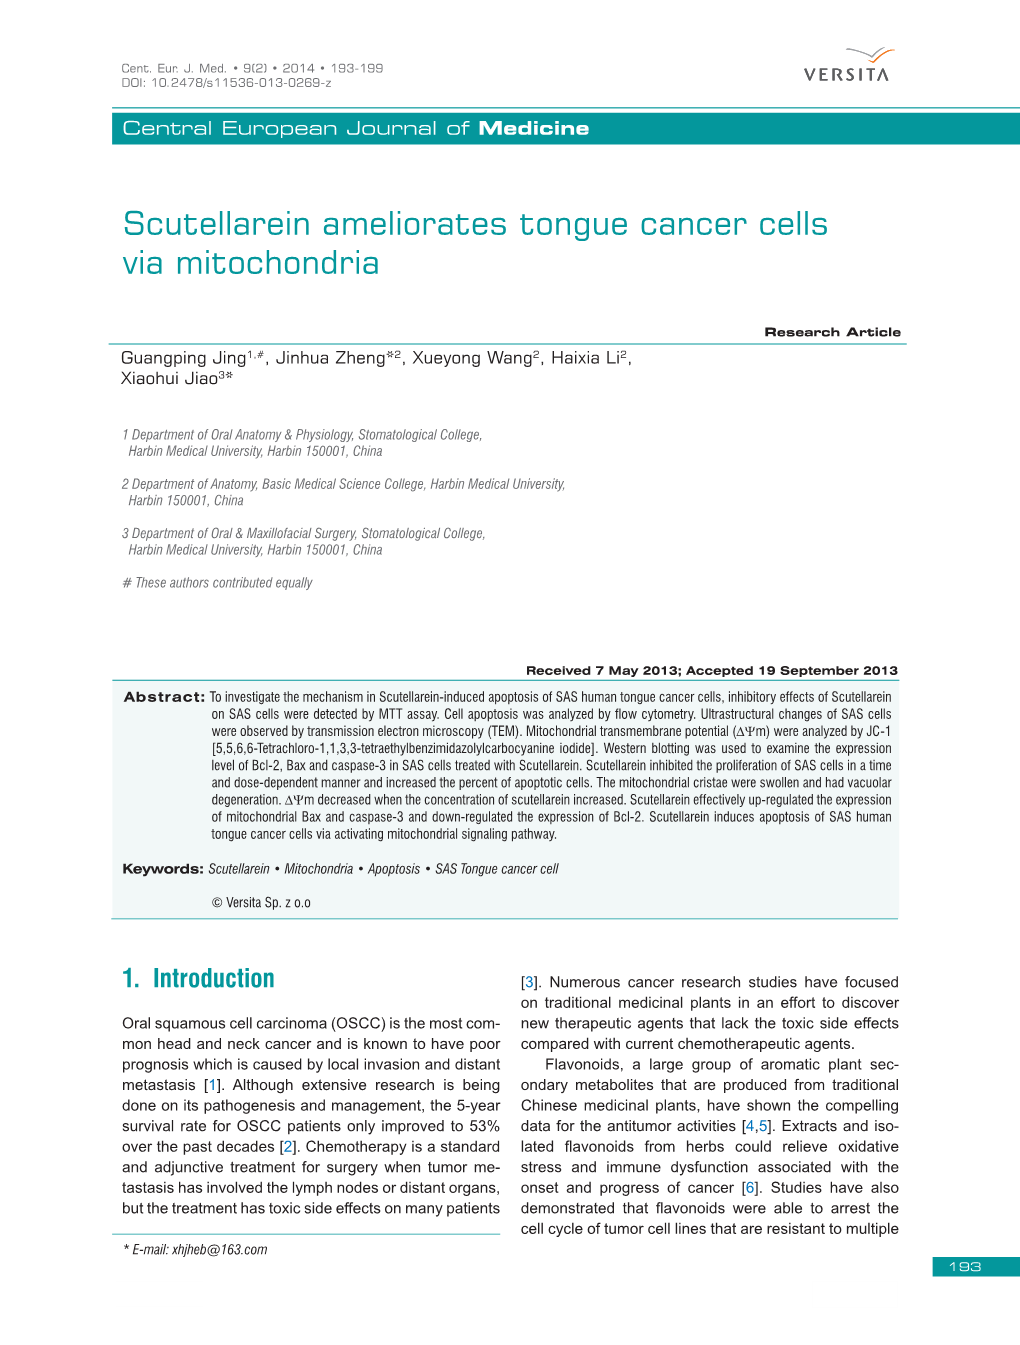 Scutellarein Ameliorates Tongue Cancer Cells Via Mitochondria